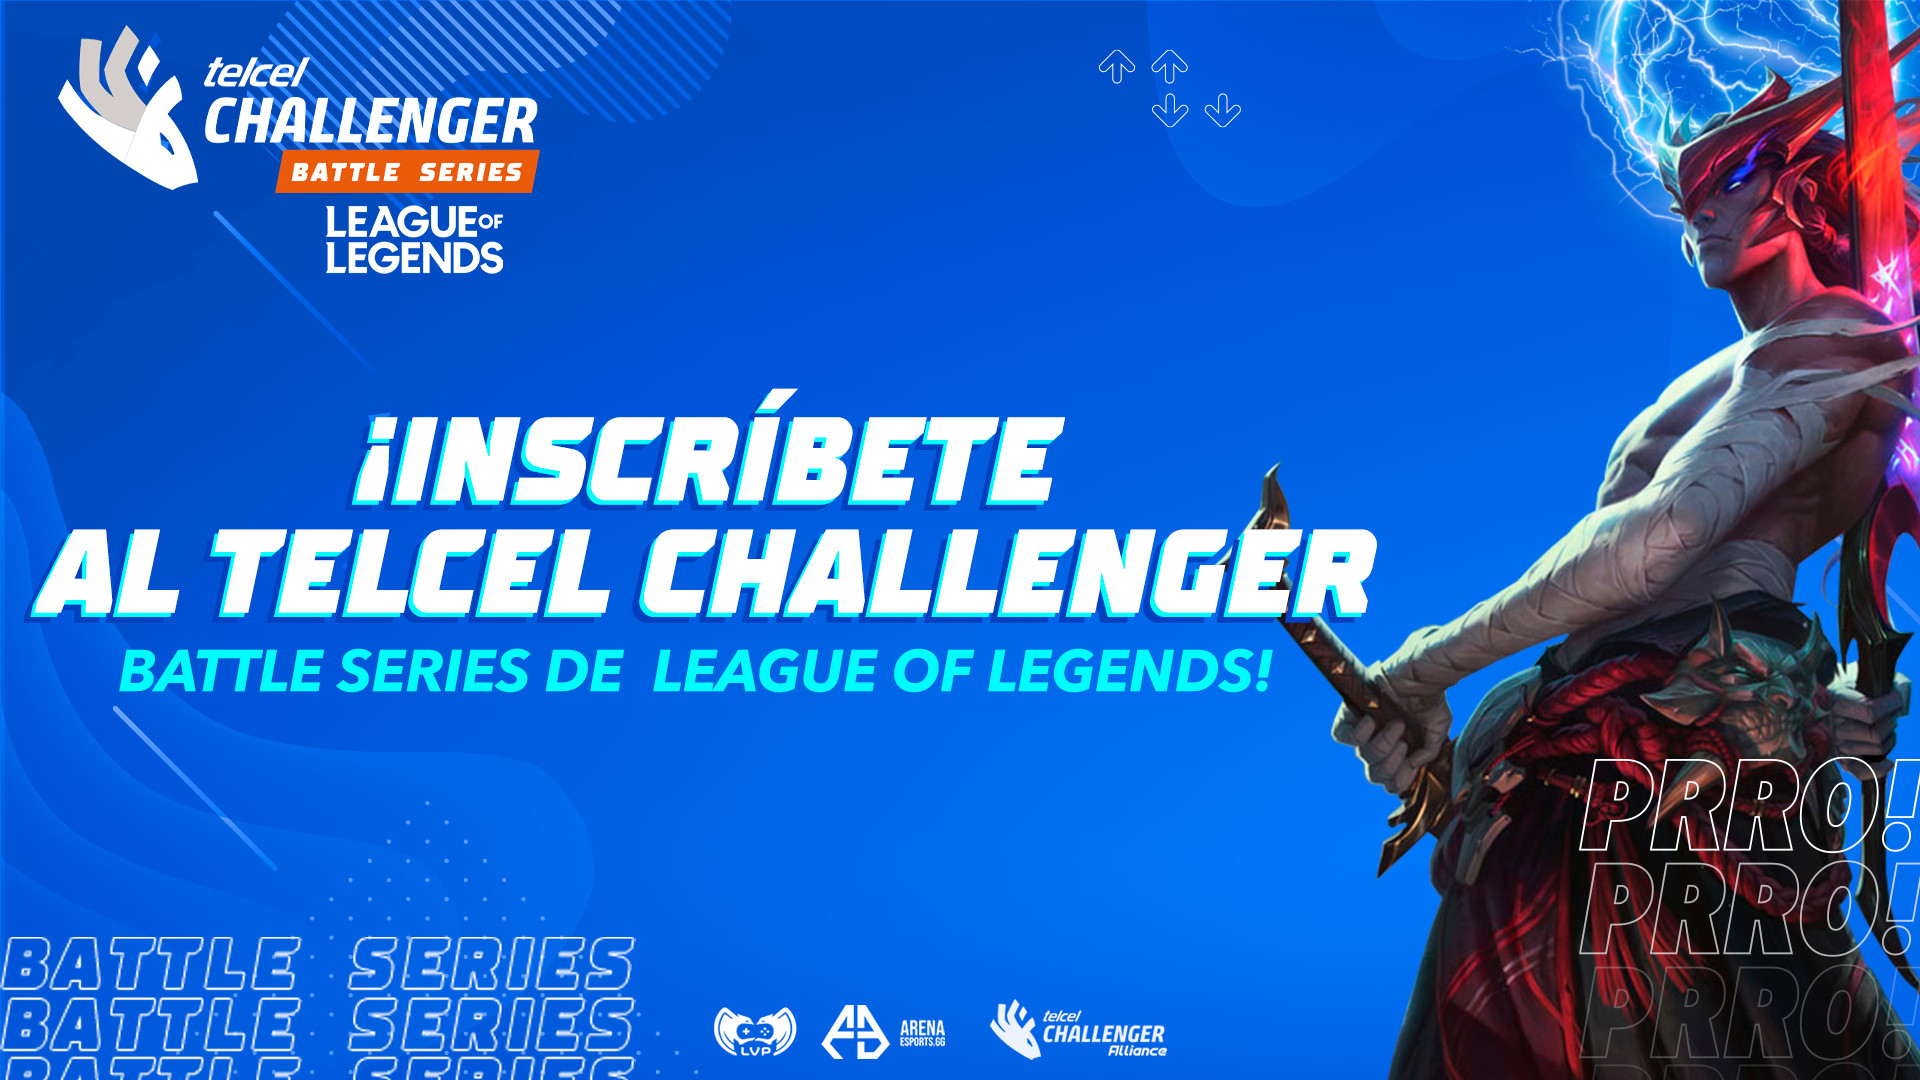 Telcel Challenger Battle Series